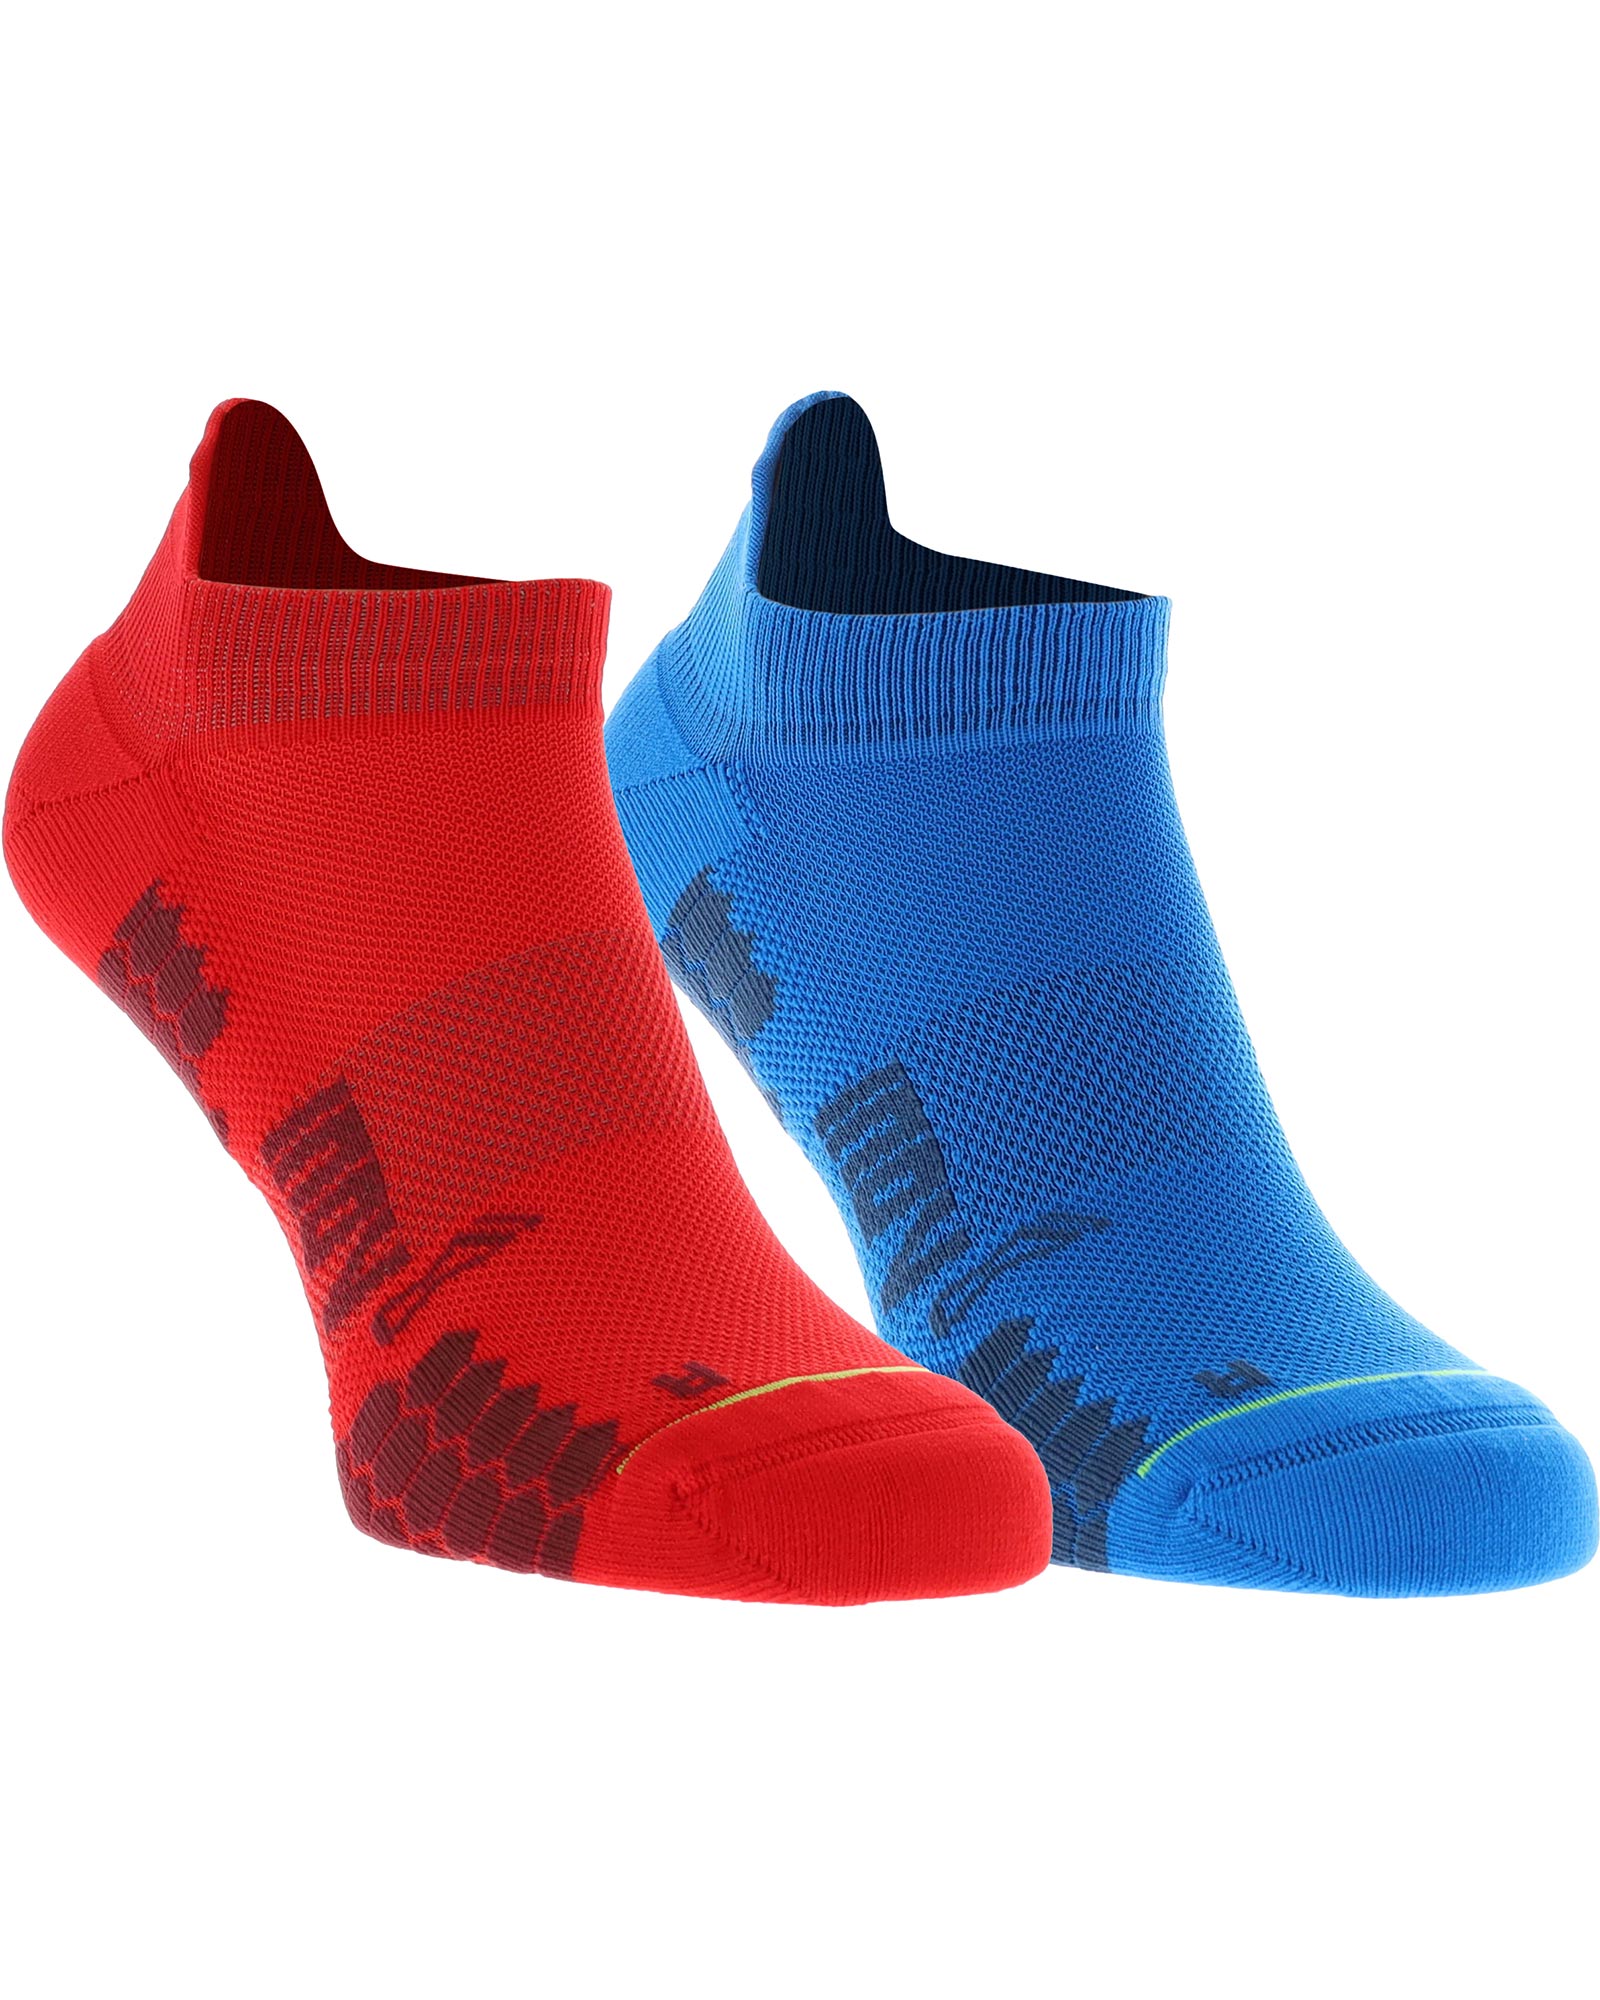 Inov 8 Trailfly Low Socks - Blue/Red M